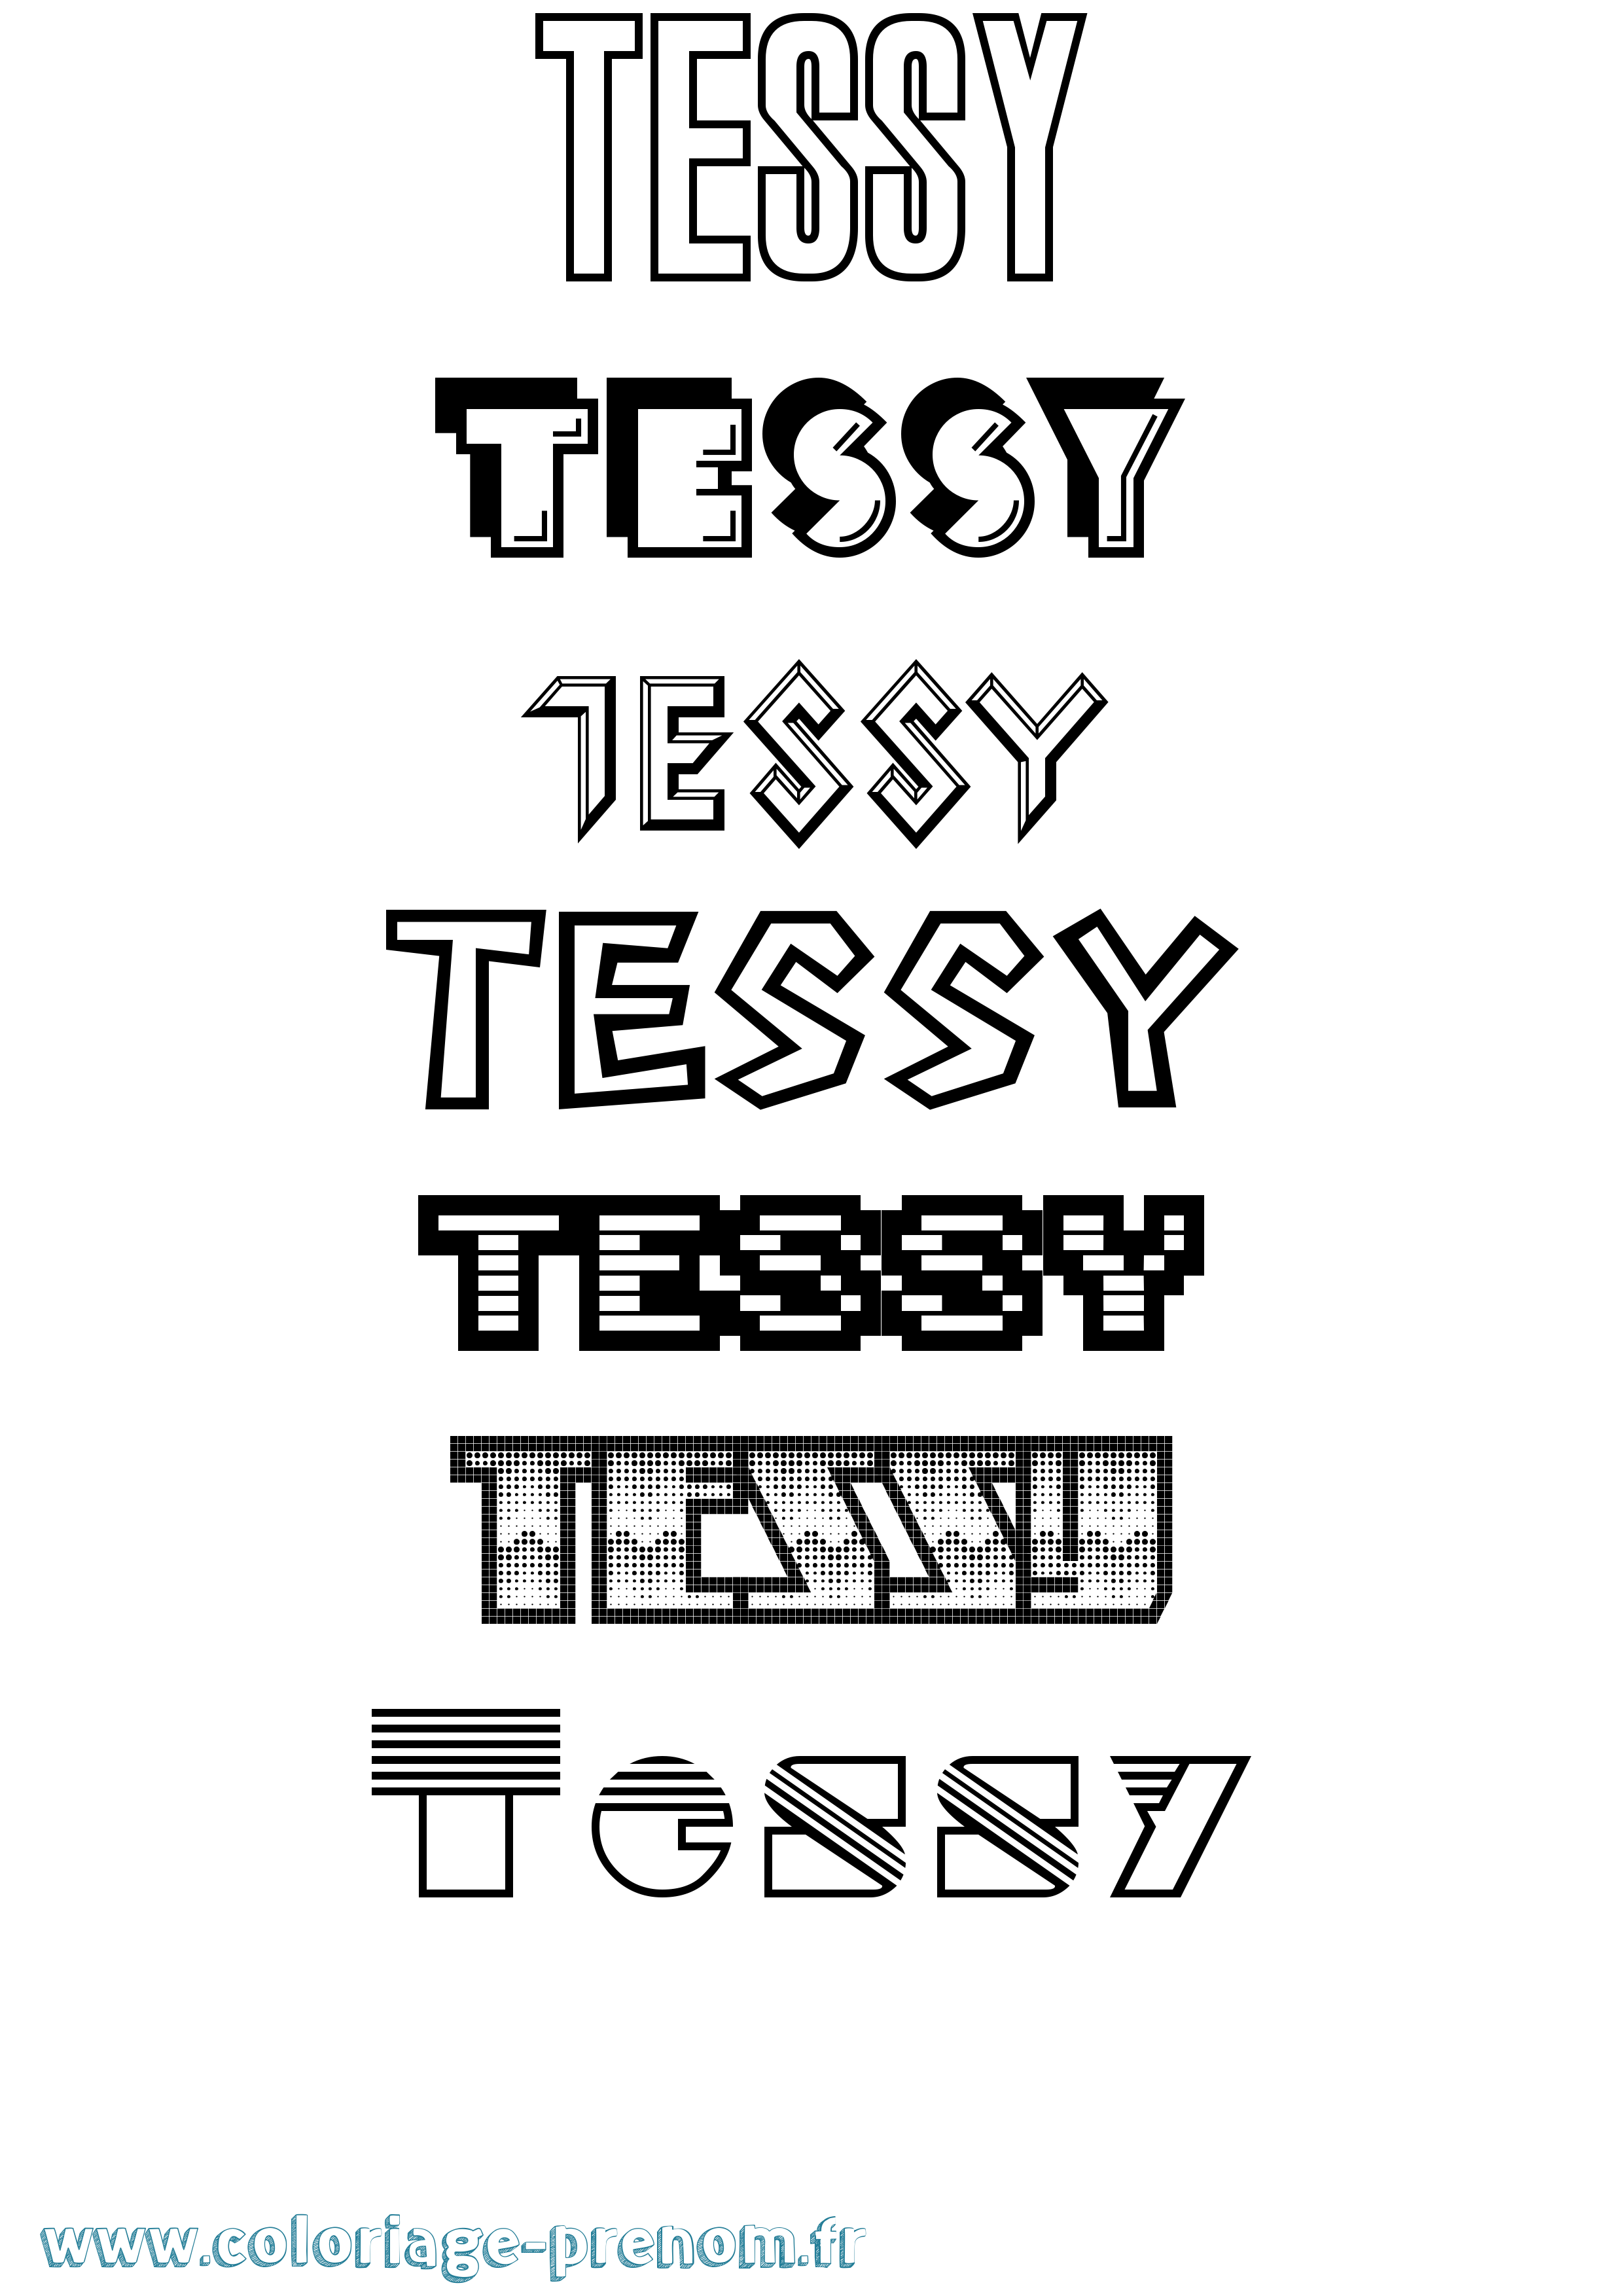 Coloriage prénom Tessy Jeux Vidéos